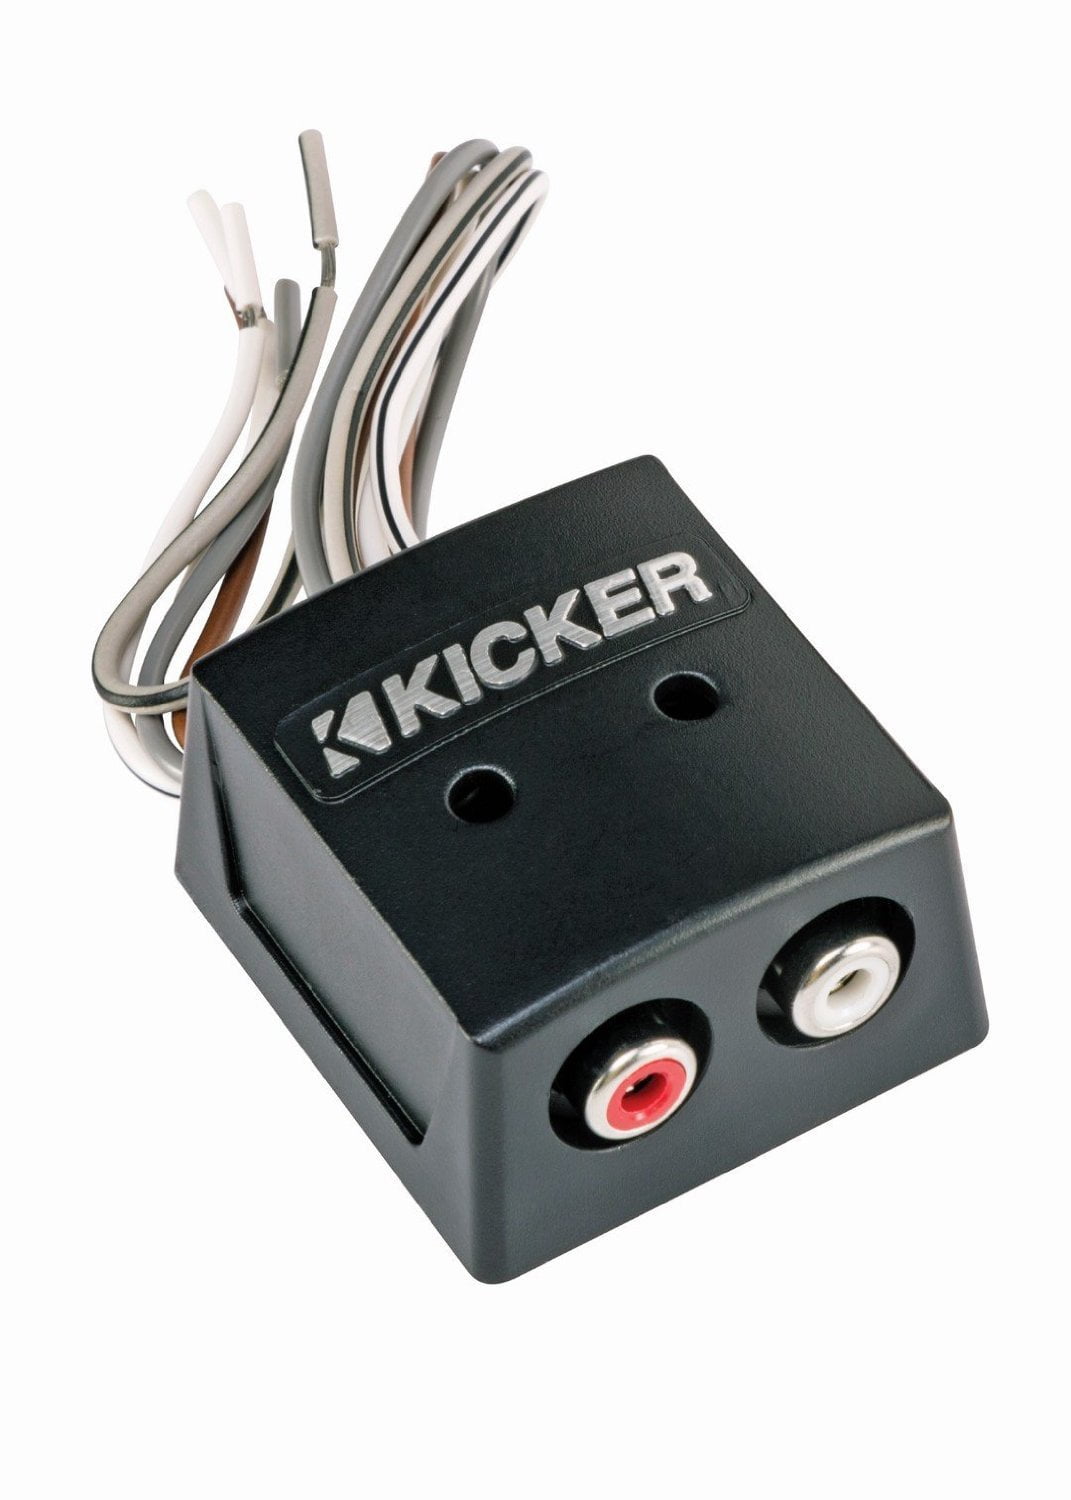 Kicker KI24 4-Meters 2-Channel K-Series RCA Audio Interconnect Cable 